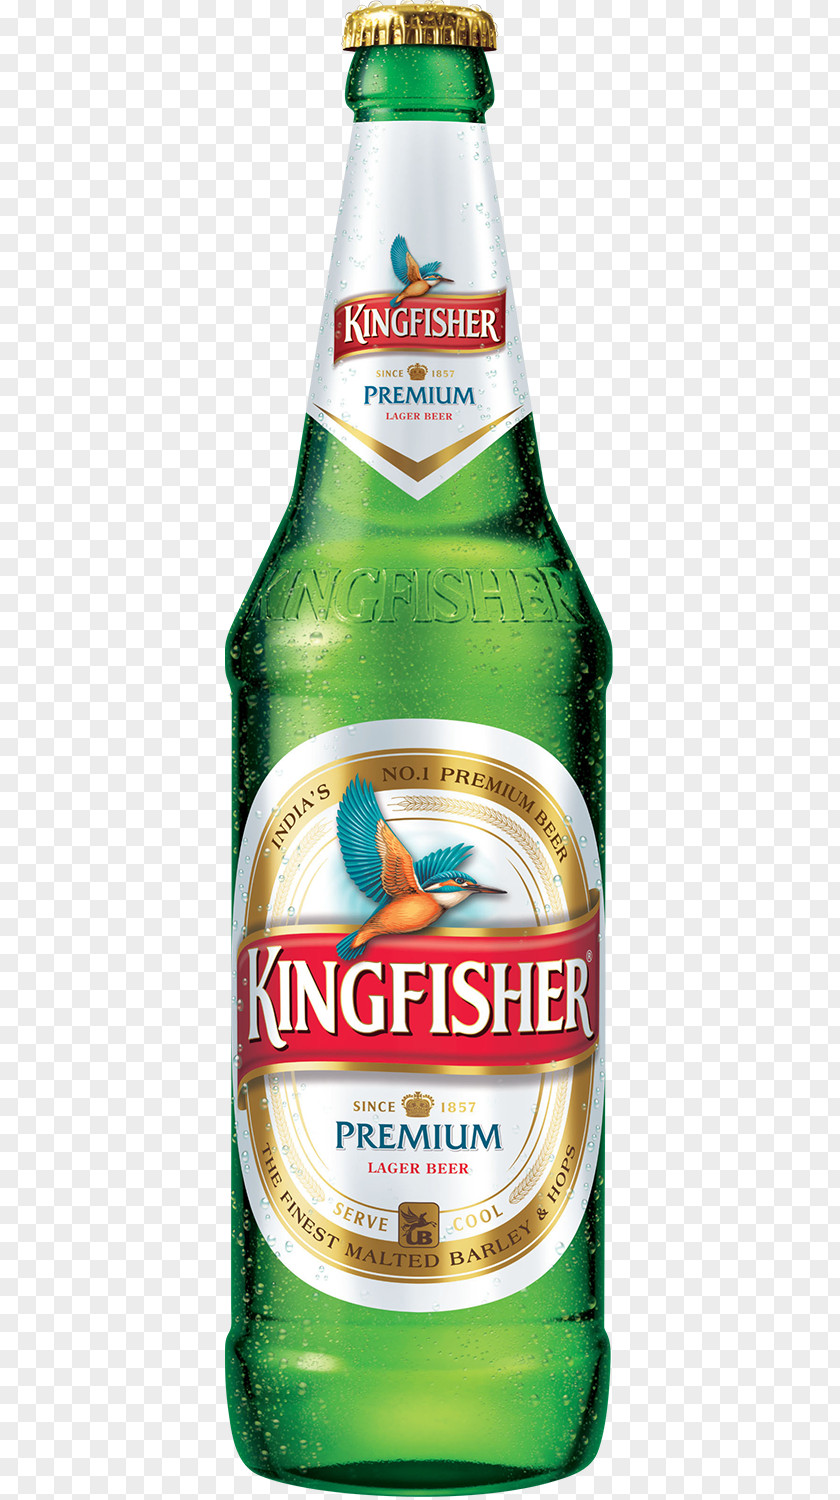 Kingfisher Beer Lager In India Distilled Beverage PNG